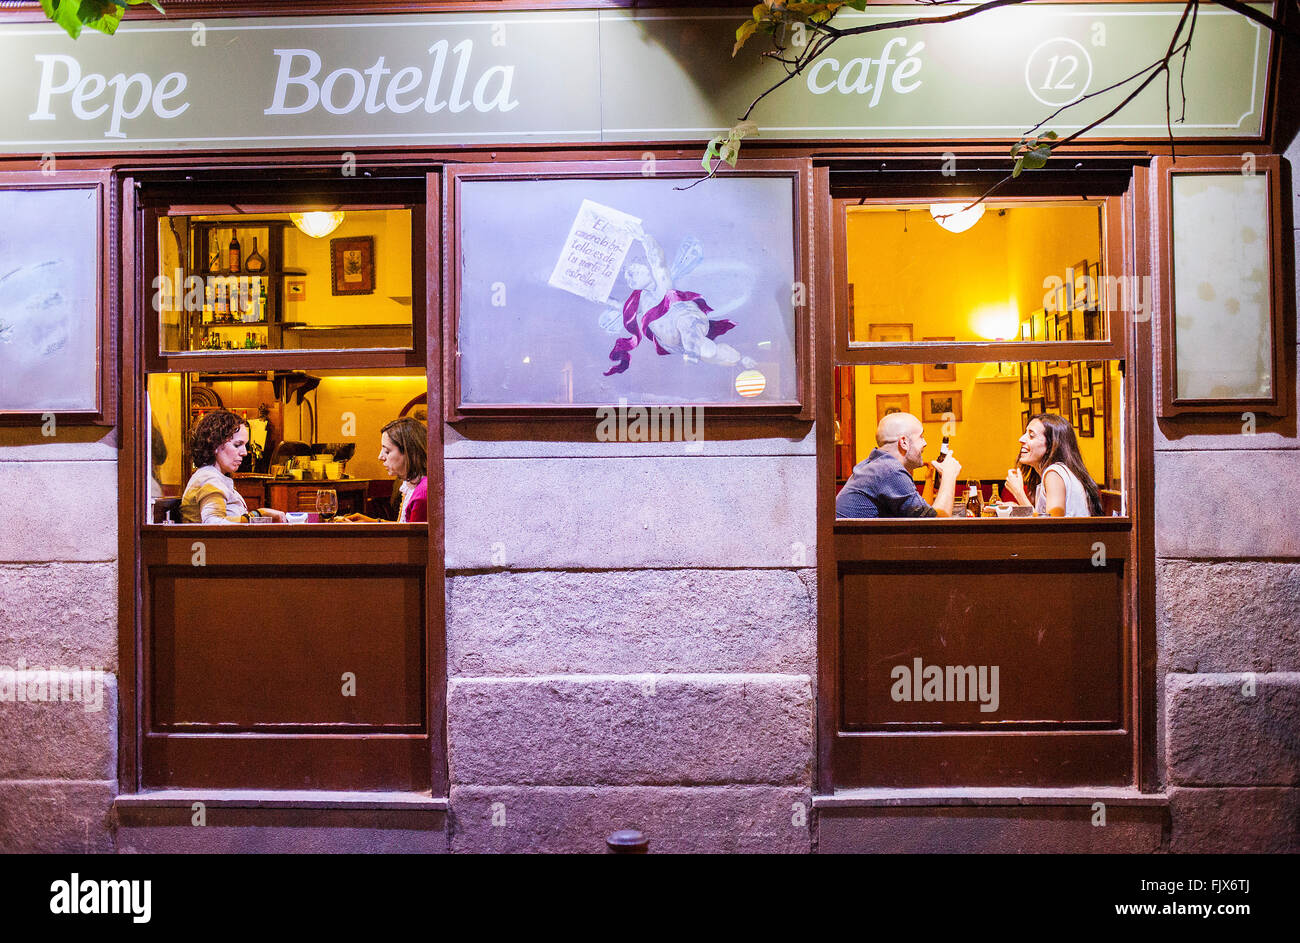 Cafe Pepe Botella, Calle de San Andres 13.Malasana quarter. Madrid, Spain Stock Photo